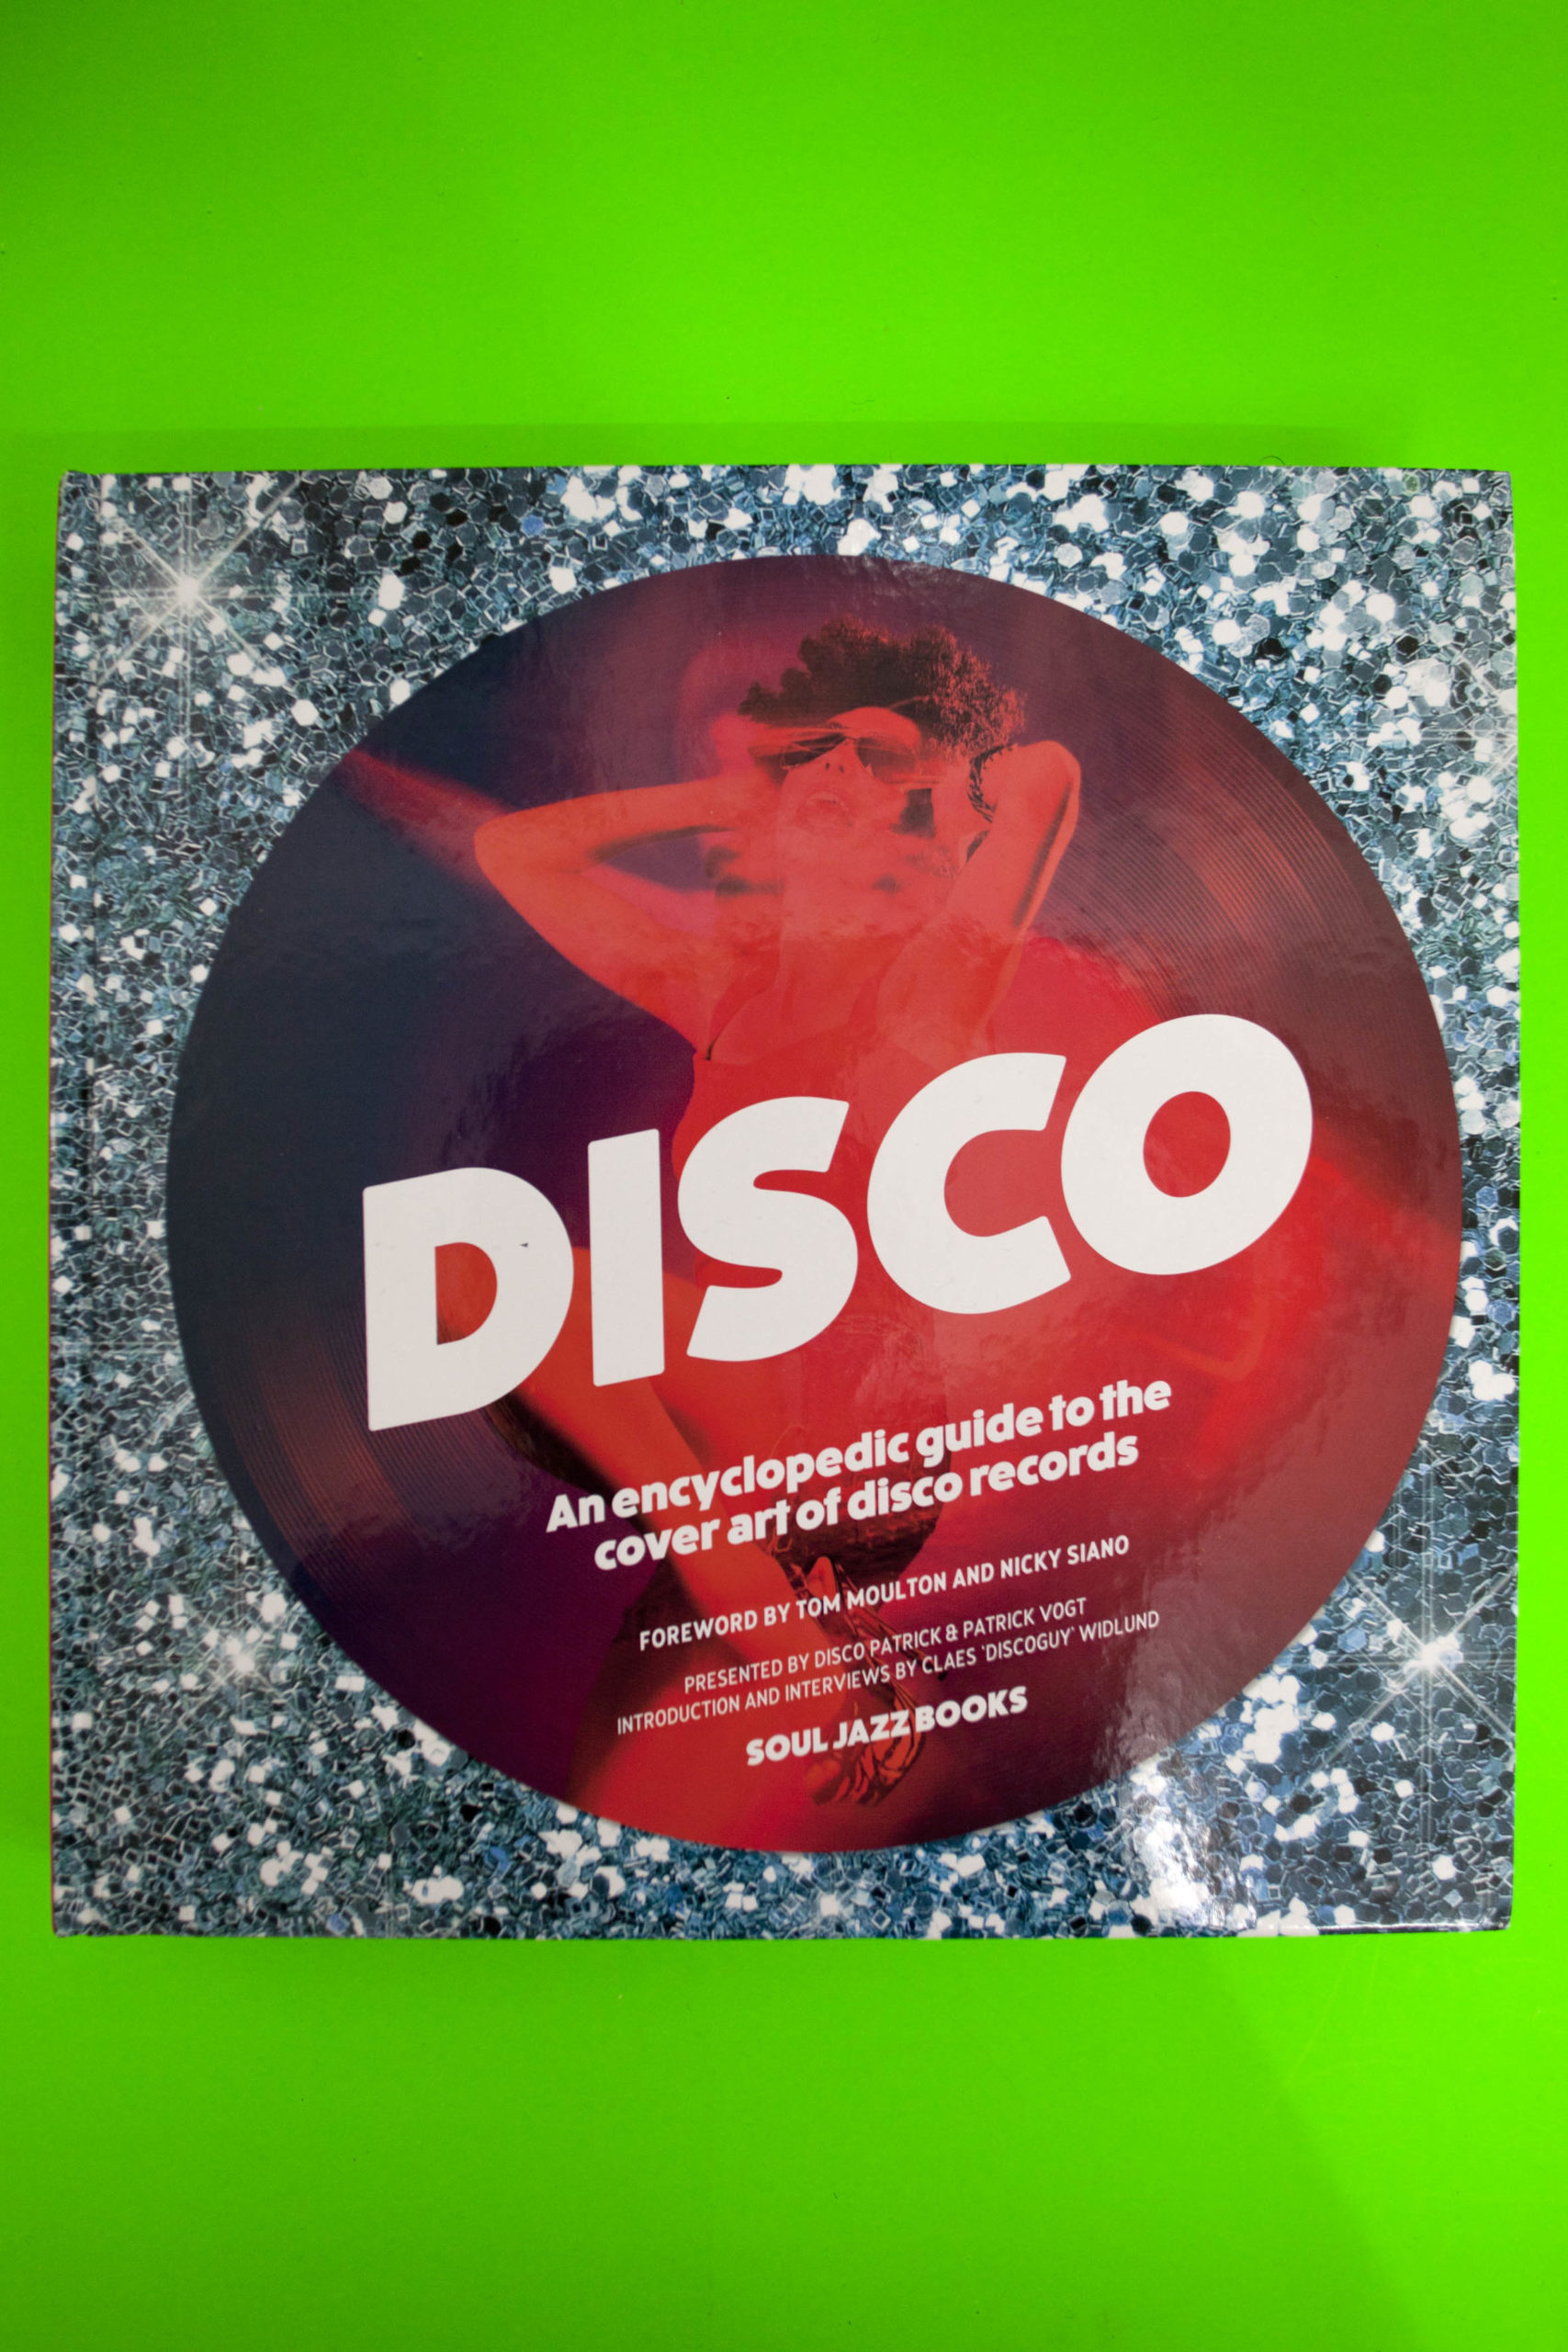 Disco. An encyclopedic guide to the cover art of disco records